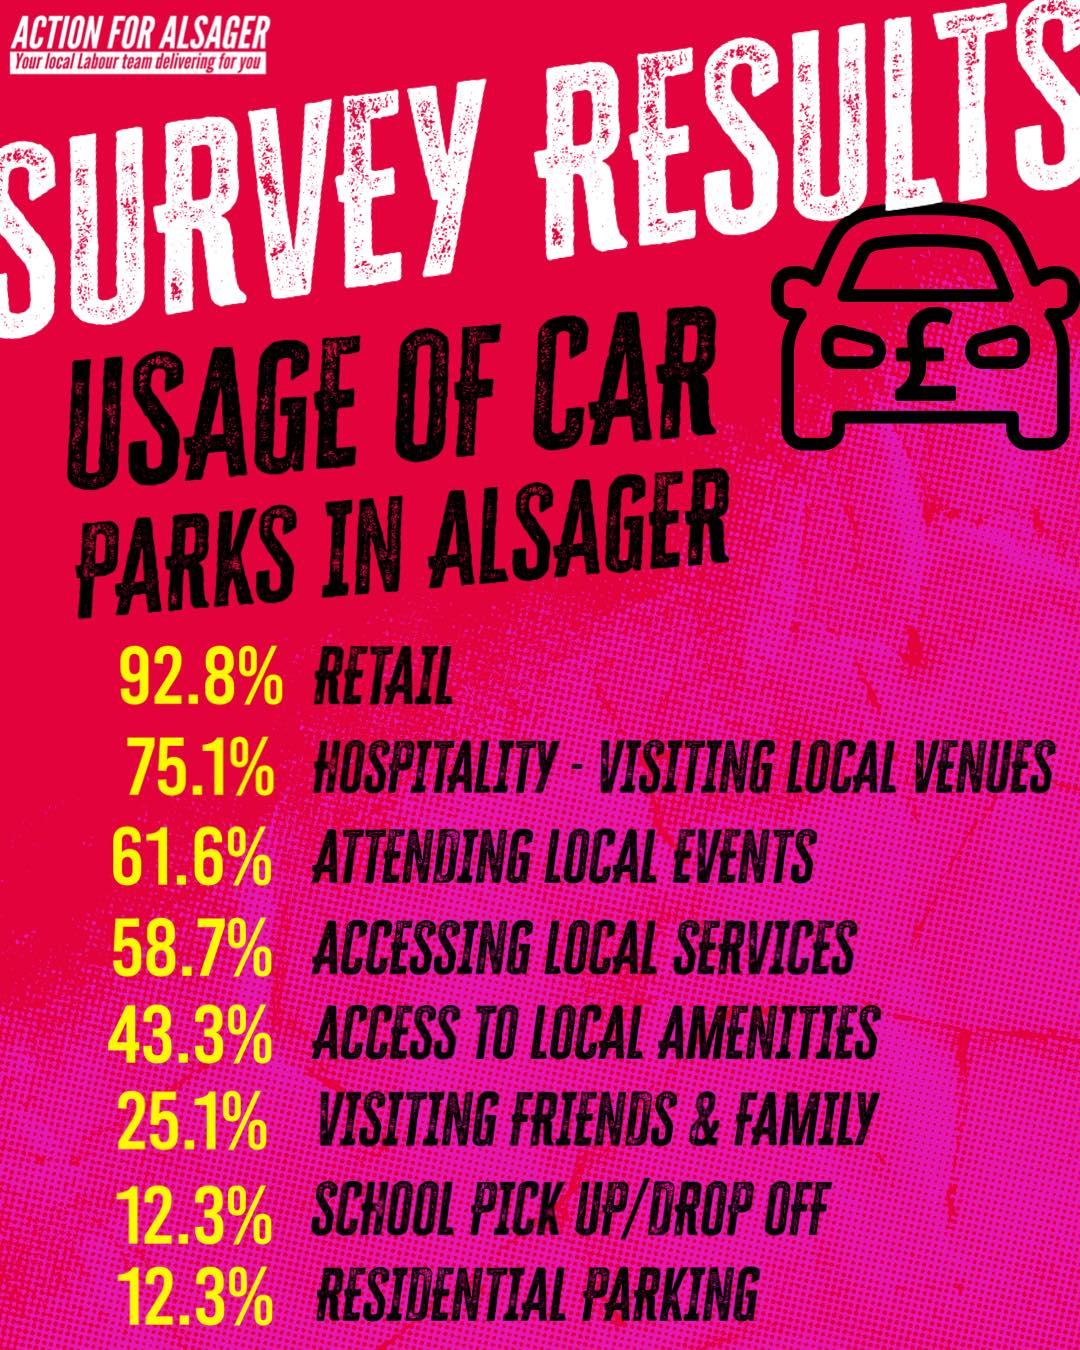 Usage of Car Parks in Alsager